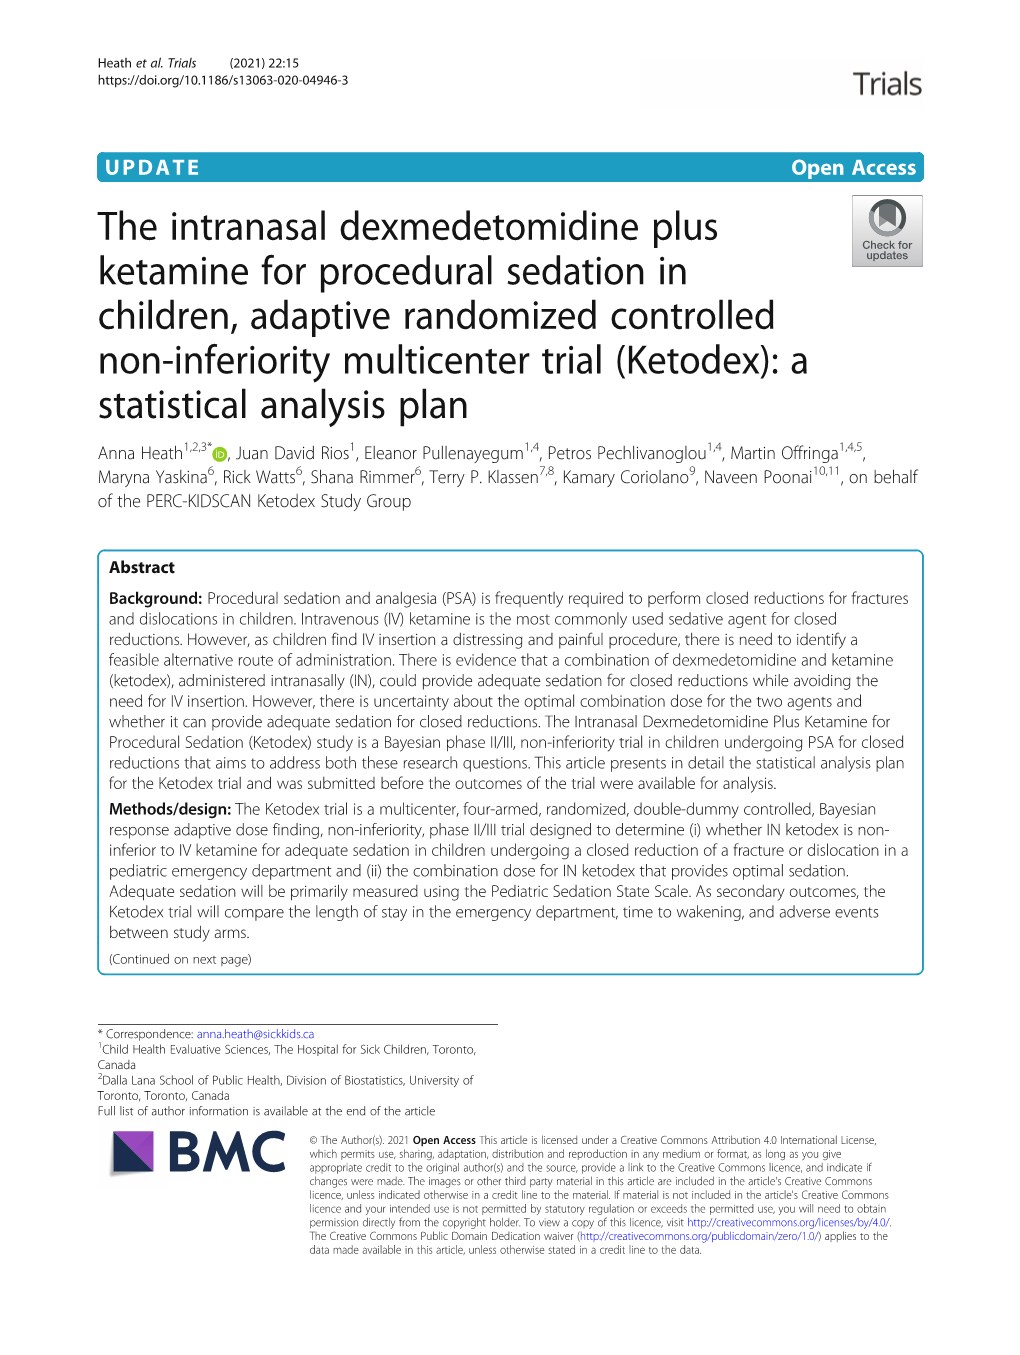 The Intranasal Dexmedetomidine Plus Ketamine for Procedural Sedation In